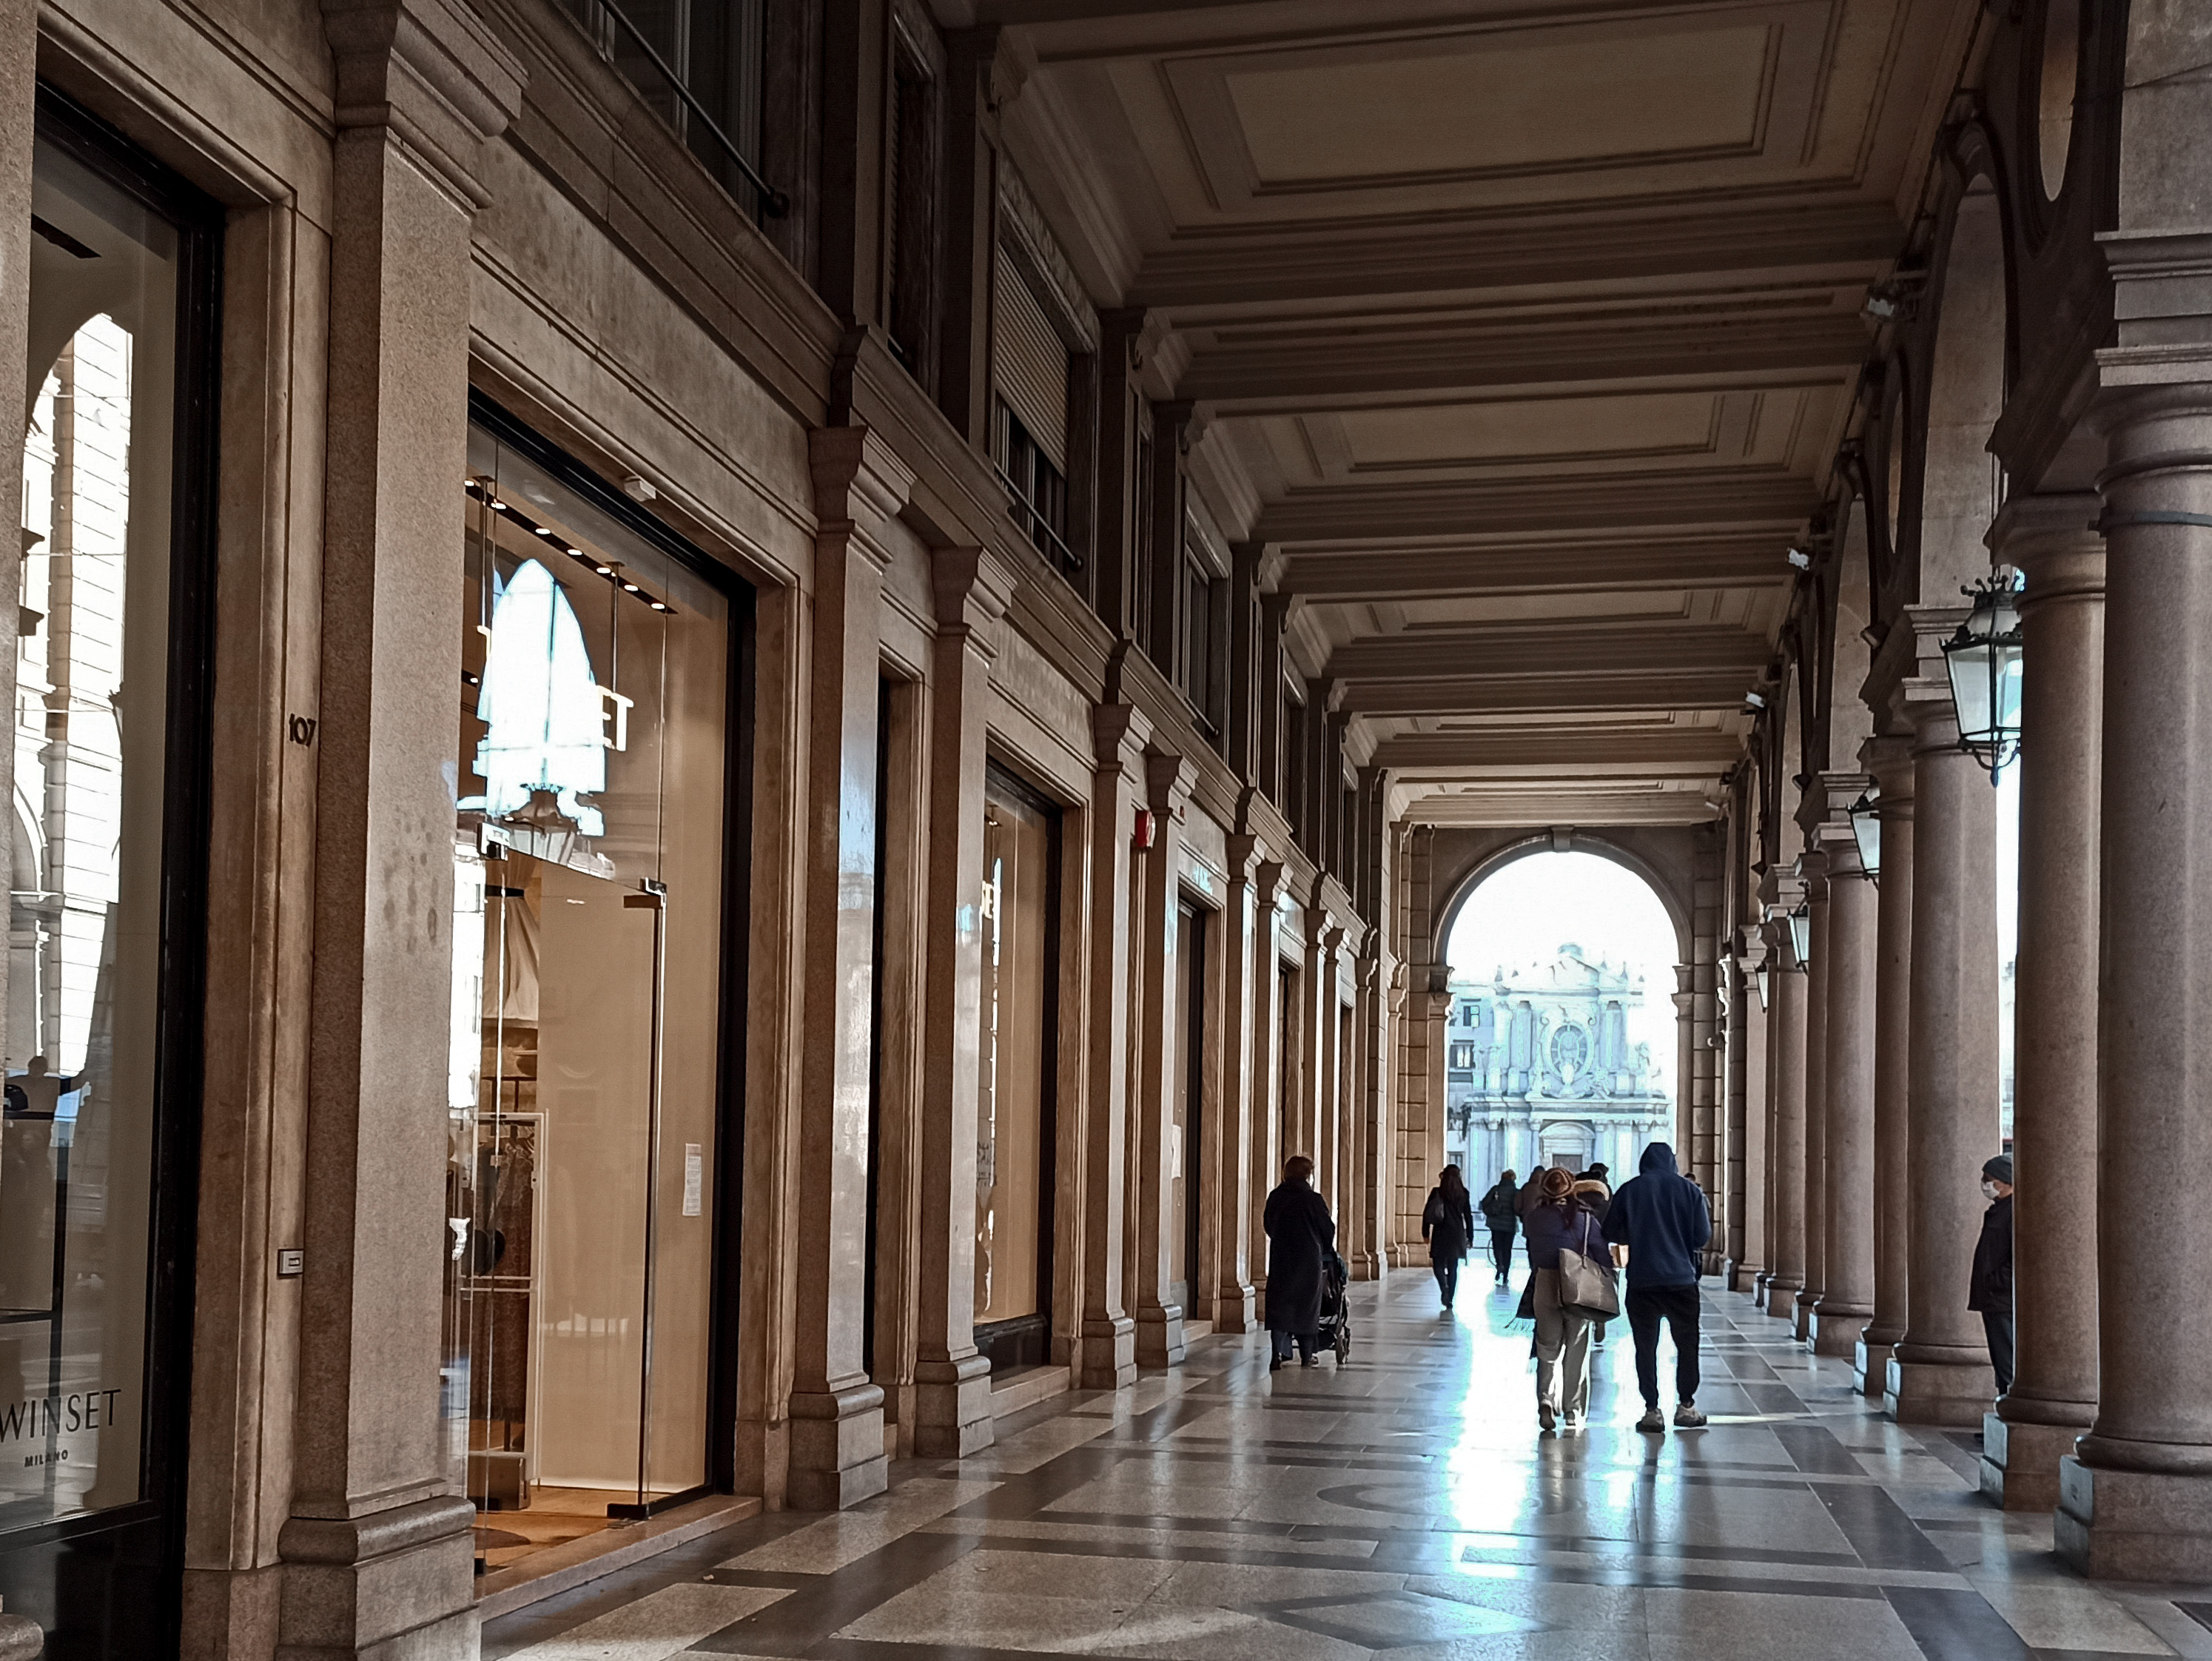 Where to walk in Turin when it rains